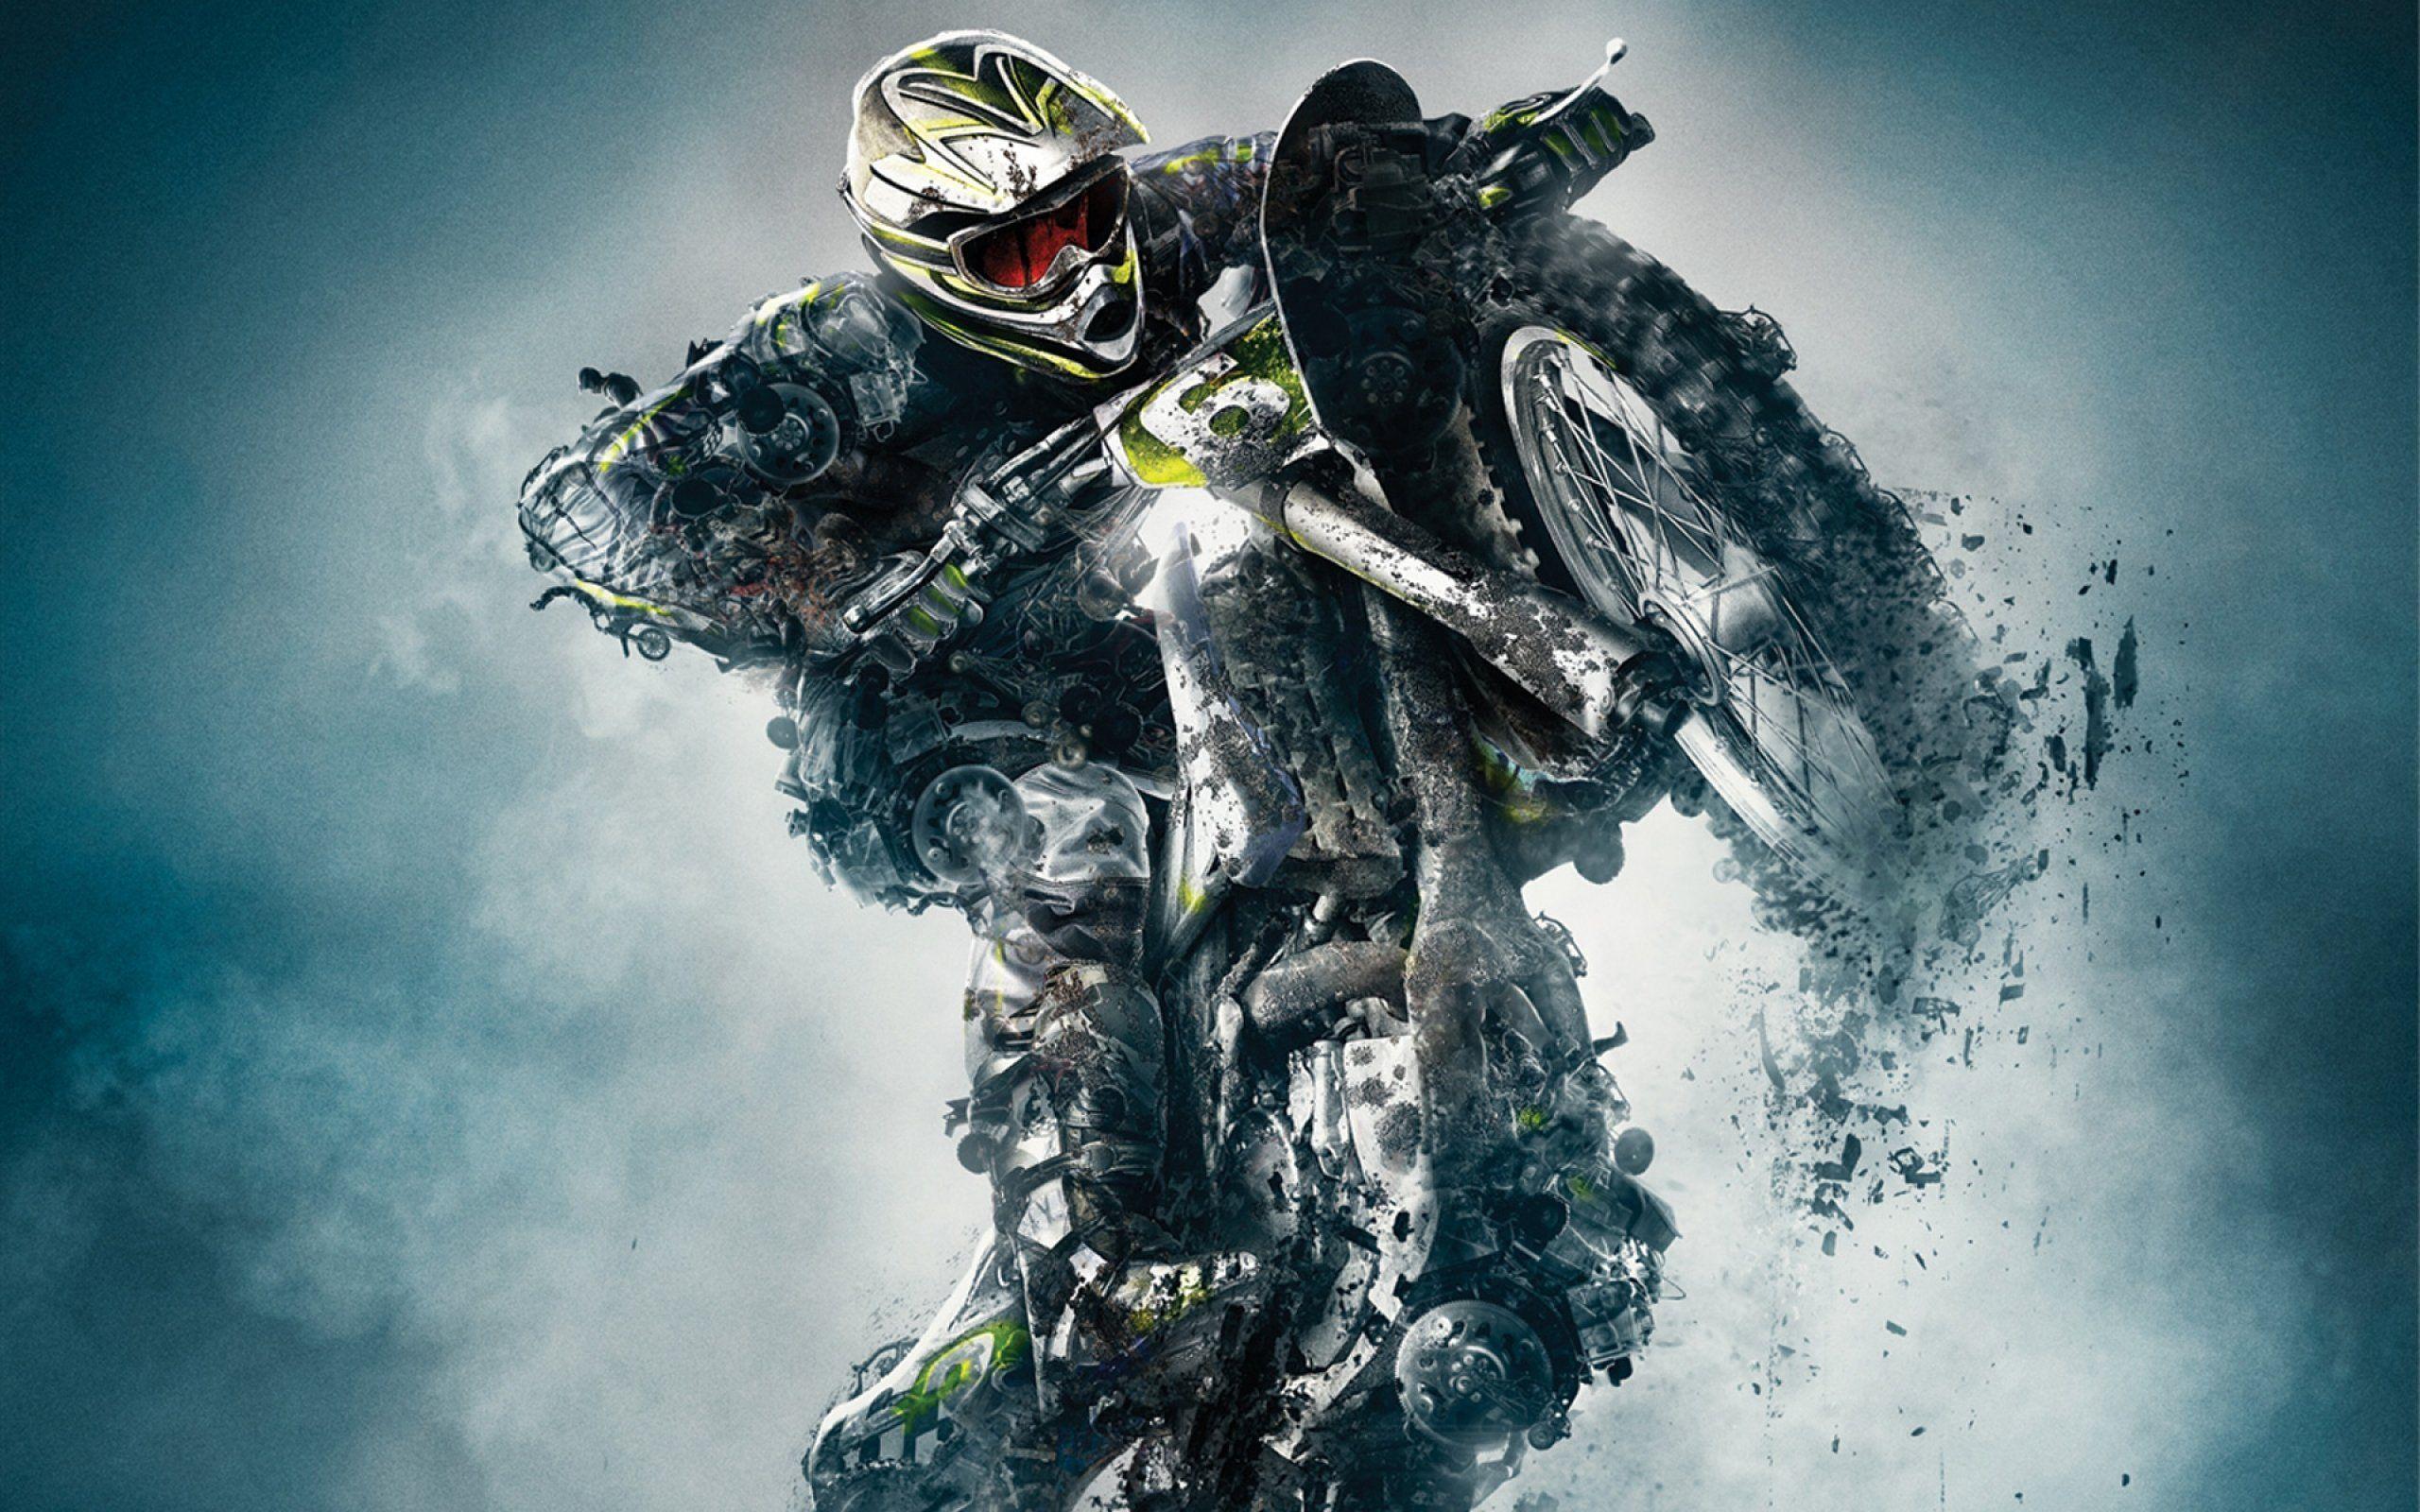 Motocross Wallpapers - Top Free Motocross Backgrounds ...